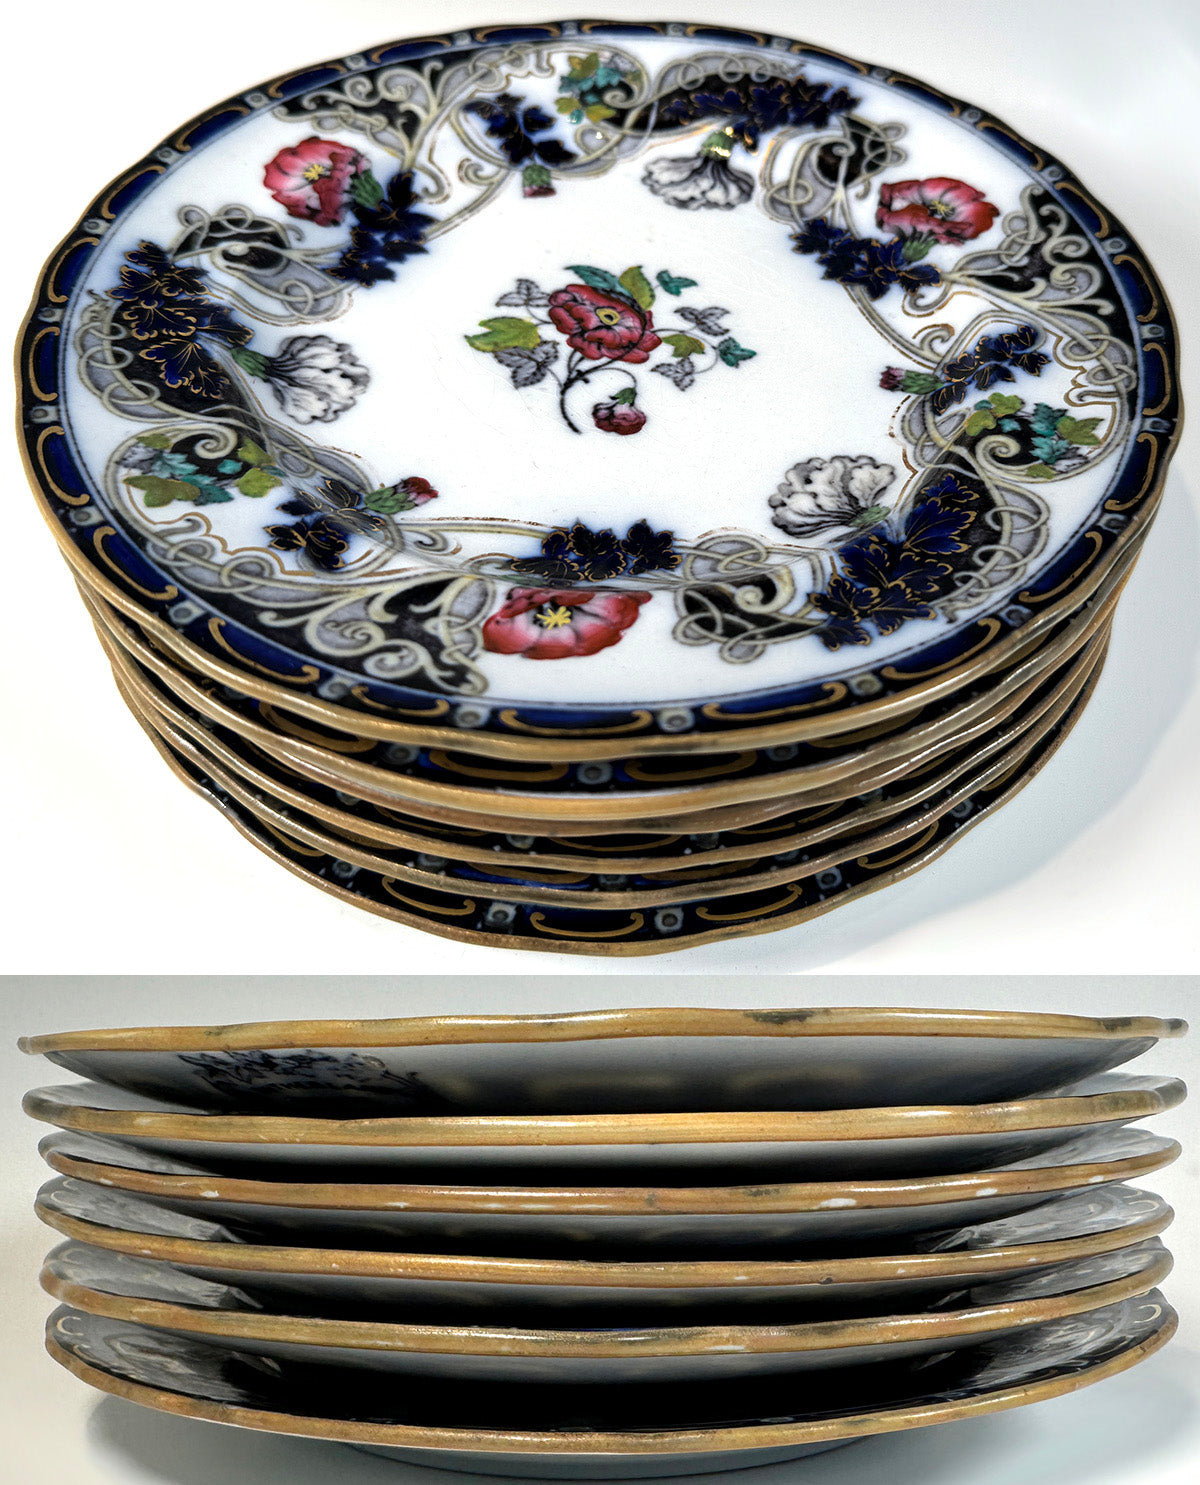 Gorgeous Set of 6 Chinese Import Imari Blue Transferware Plates c. 1830s, Charles Meigh Improved Stone China